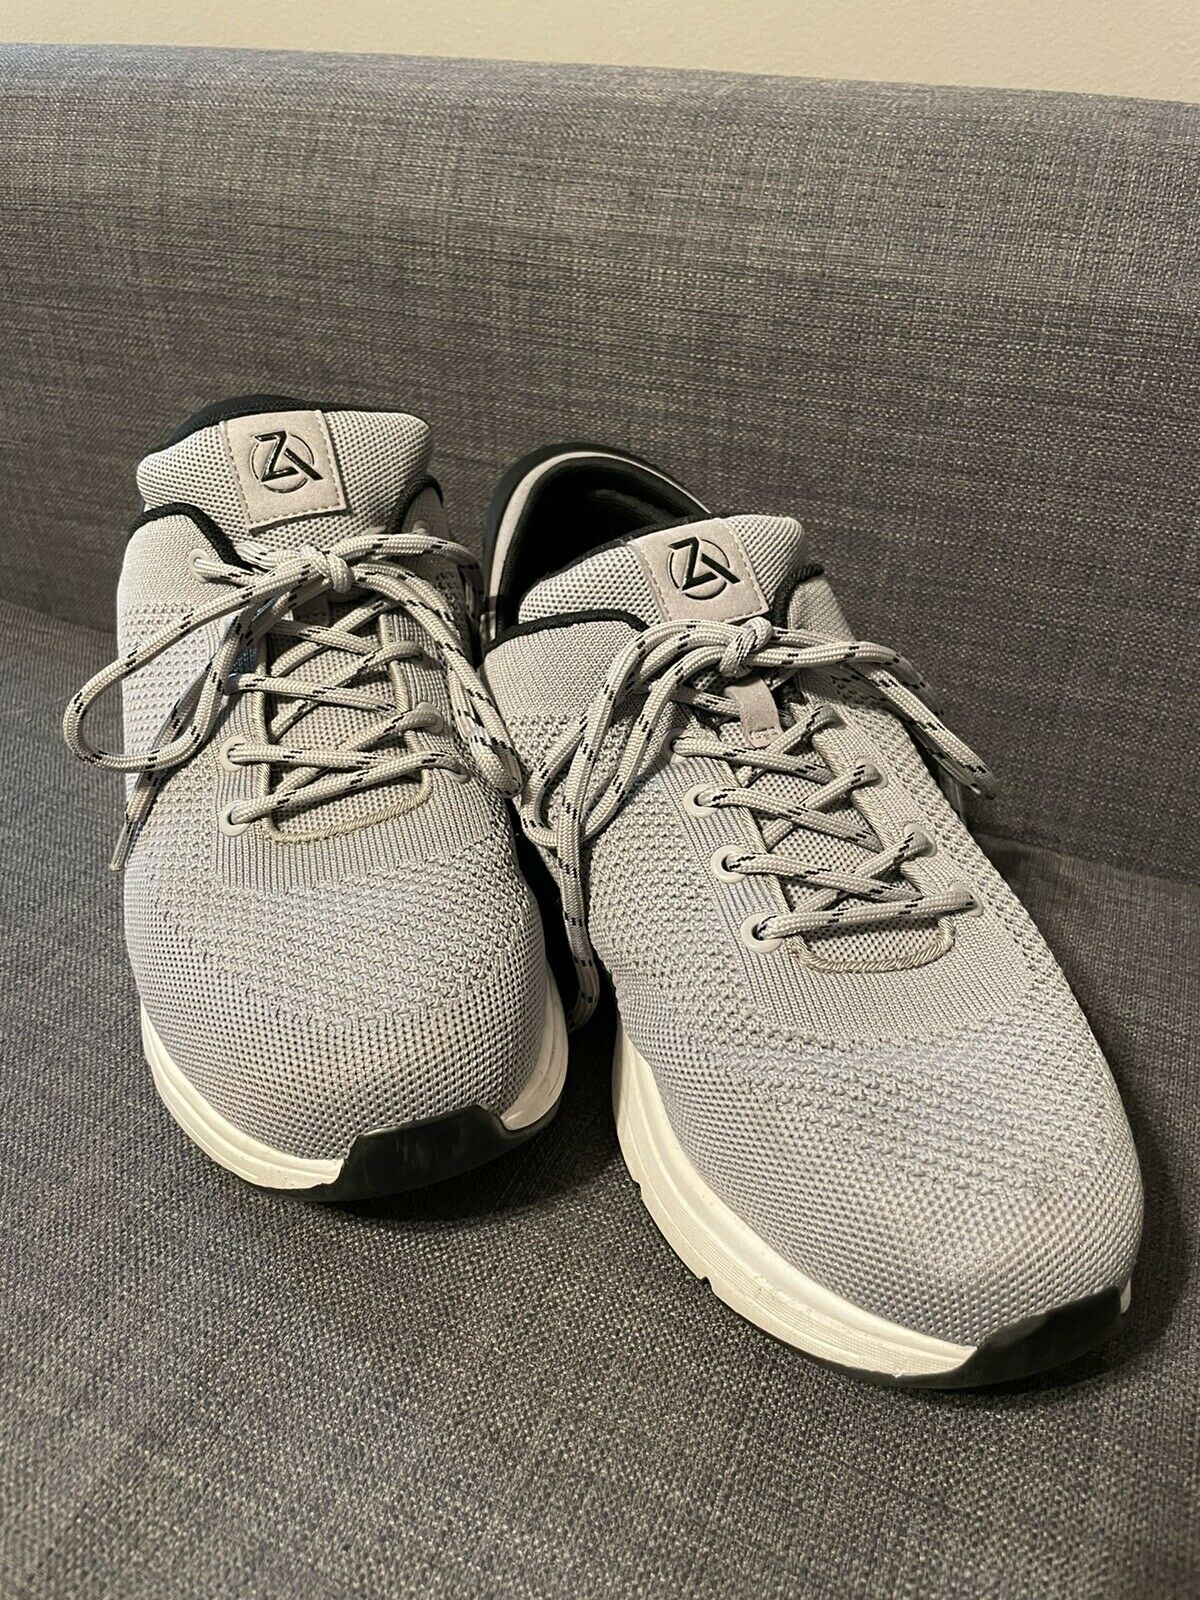 Zeba Hands Free Sneakers Tennis Shoes Athletic Comfort Walking Gray Men's US 12